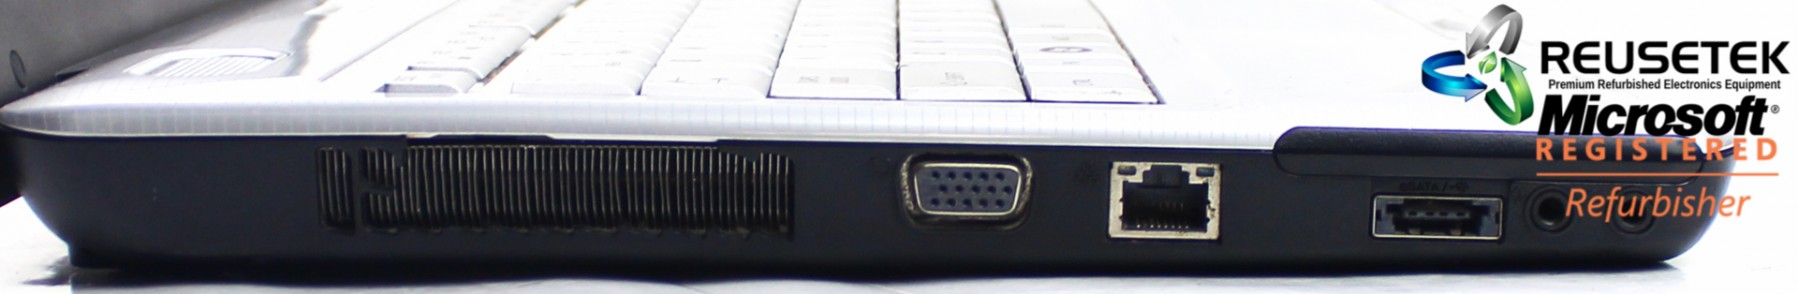 CDH5220-Toshiba Satellite L505-ES5018 15.6" Notebook Laptop (Bad Optical Drive)-image